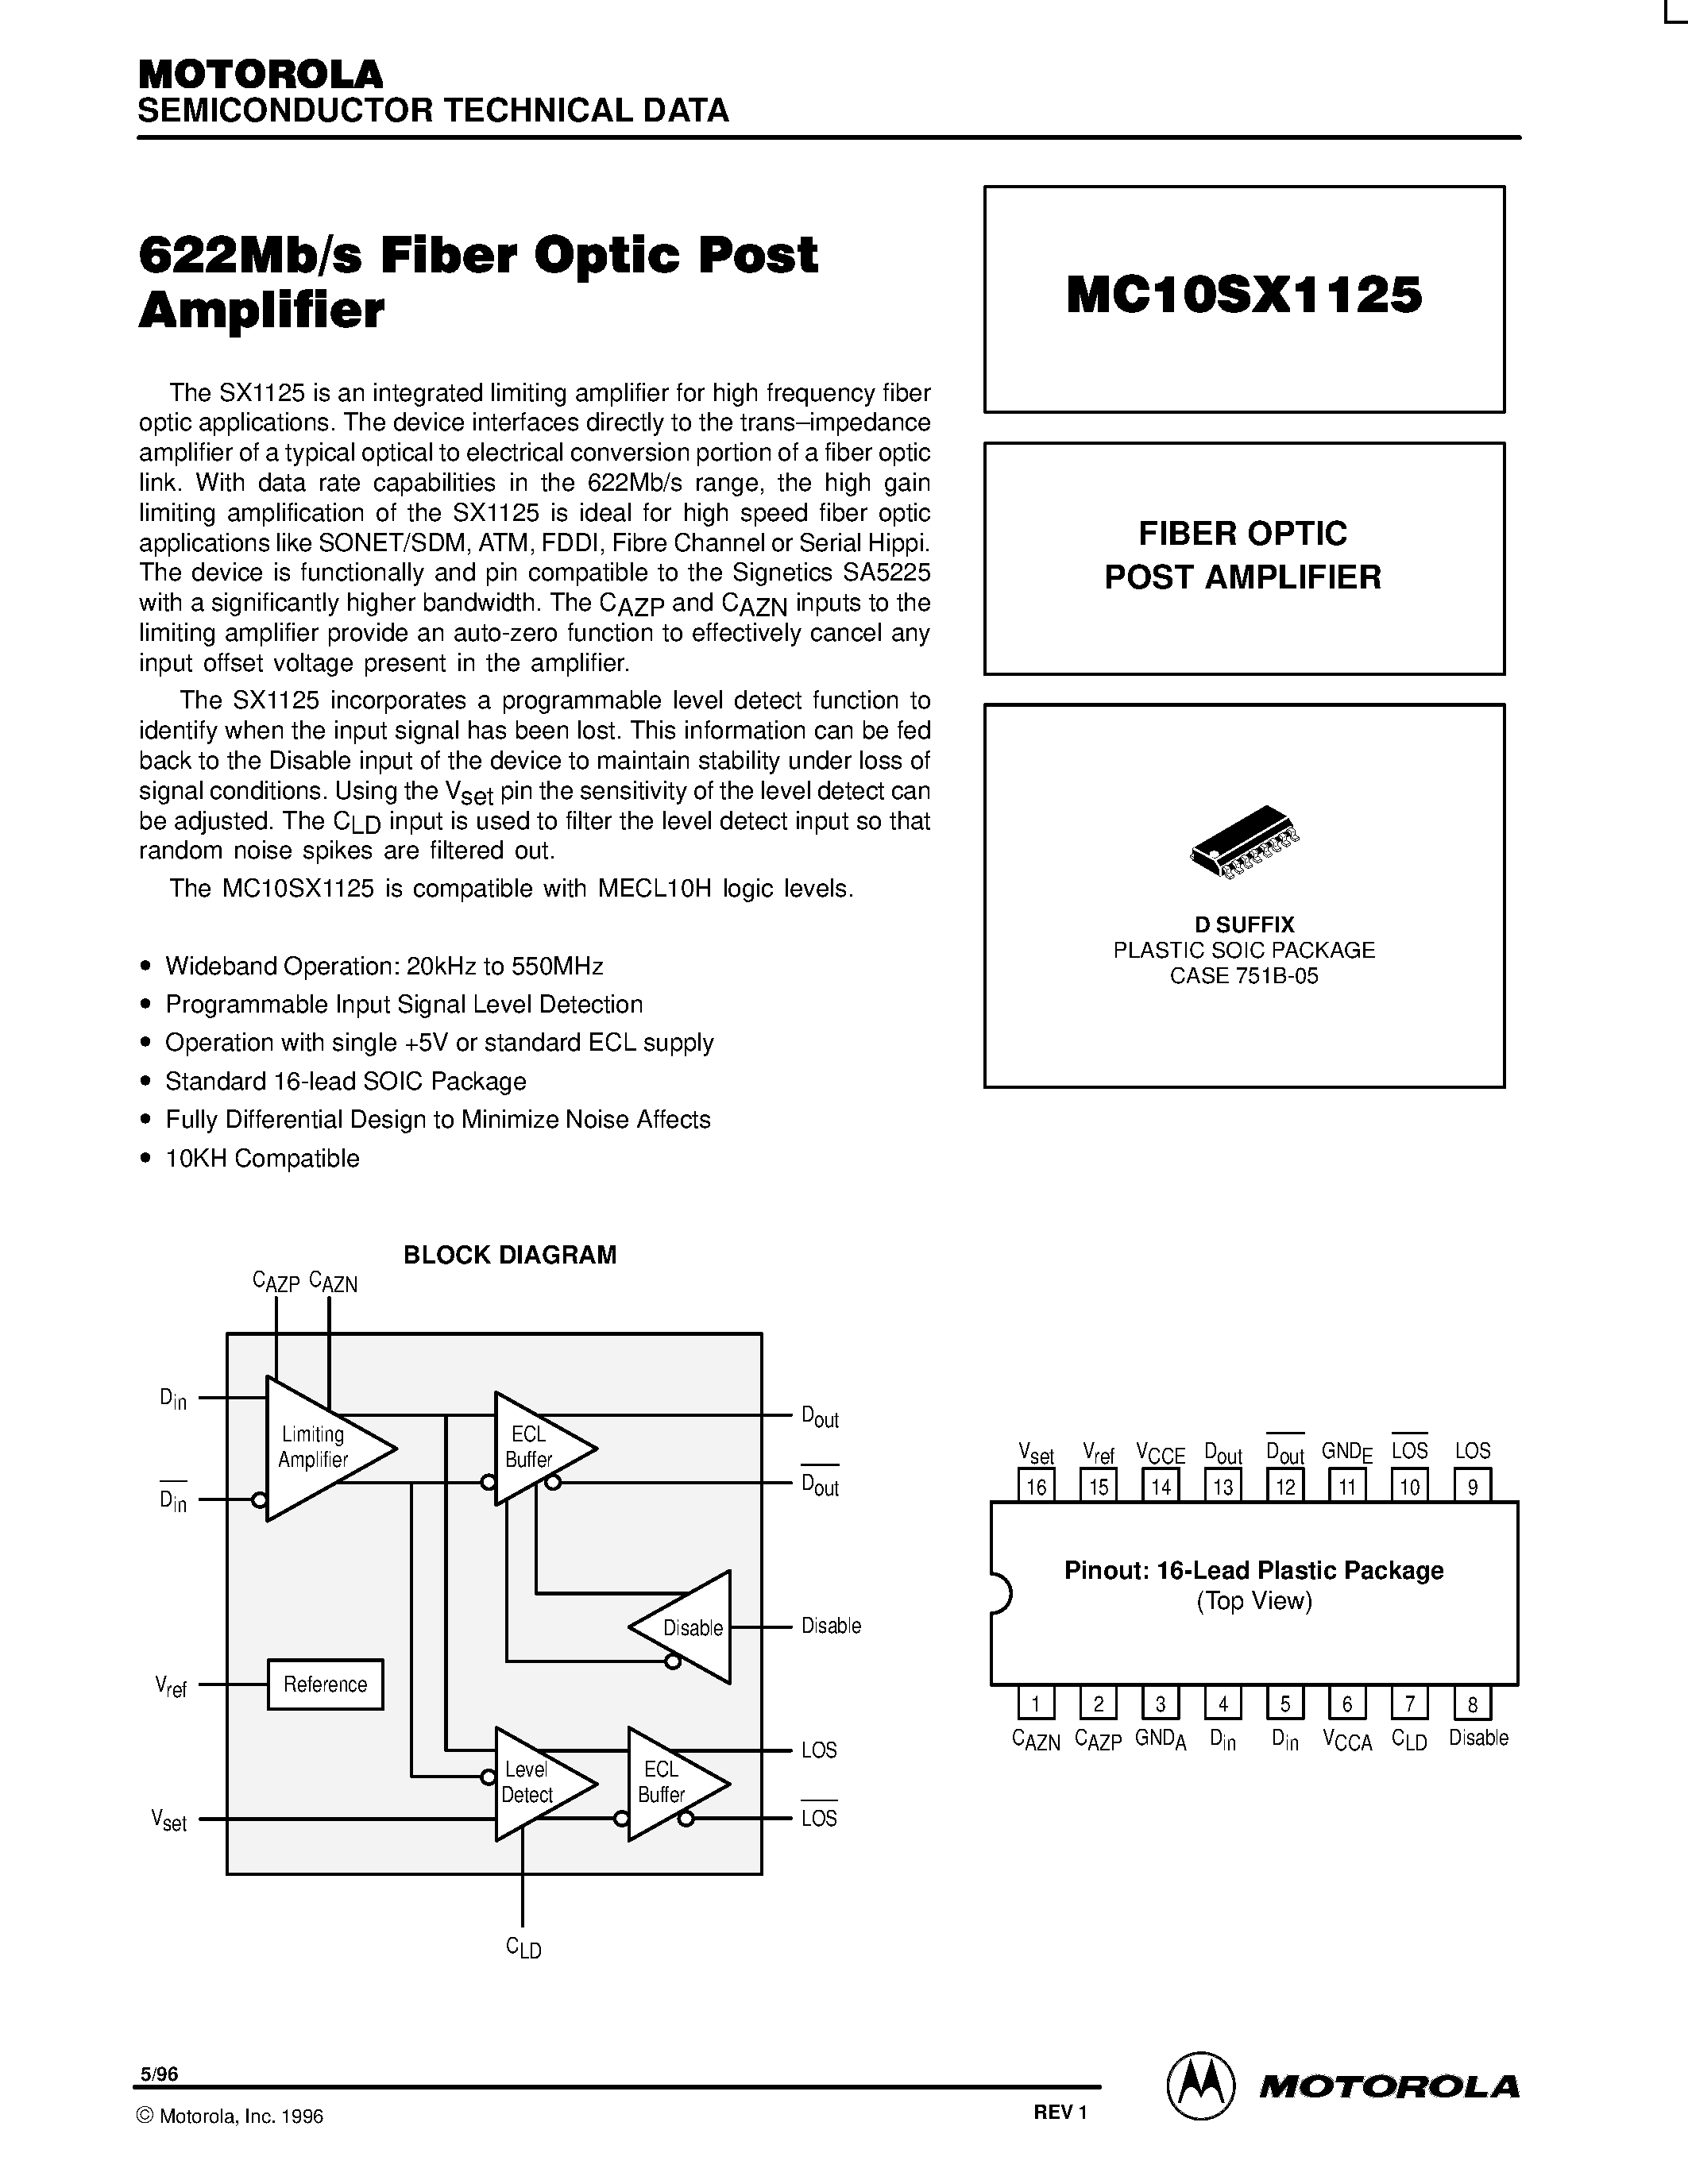 Datasheet MC10SX1125 - FIBER OPTIC POST AMPLIFIER page 1